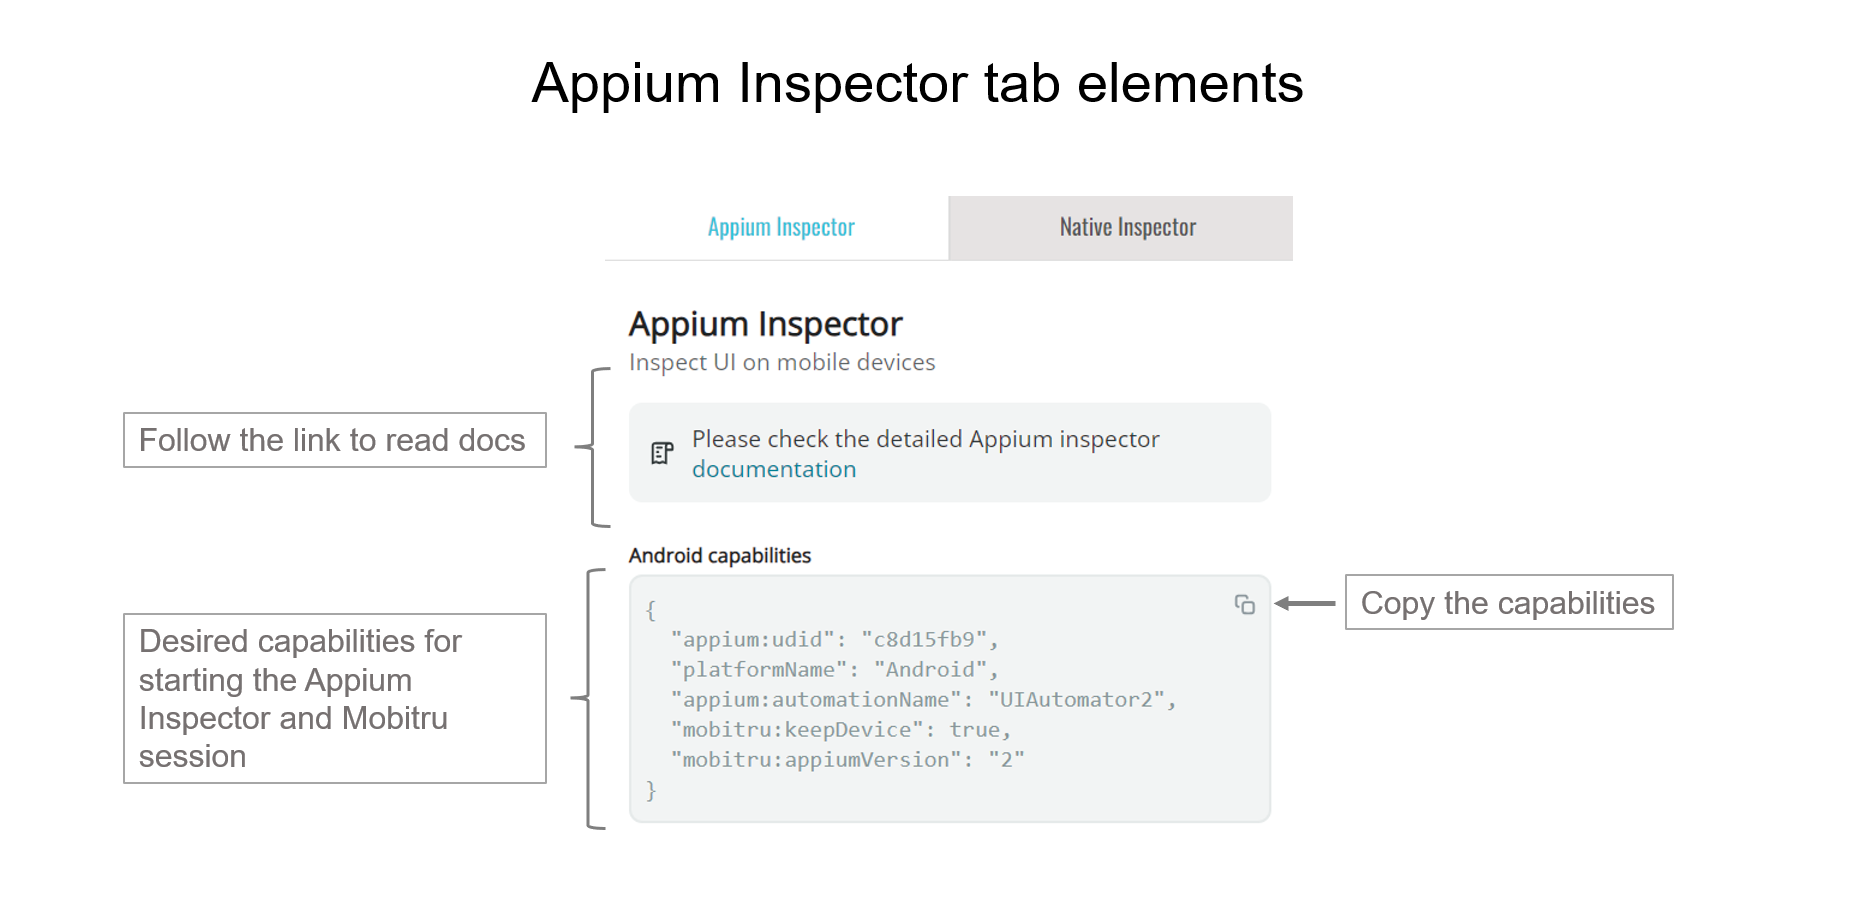 Appium Inspector tab elements